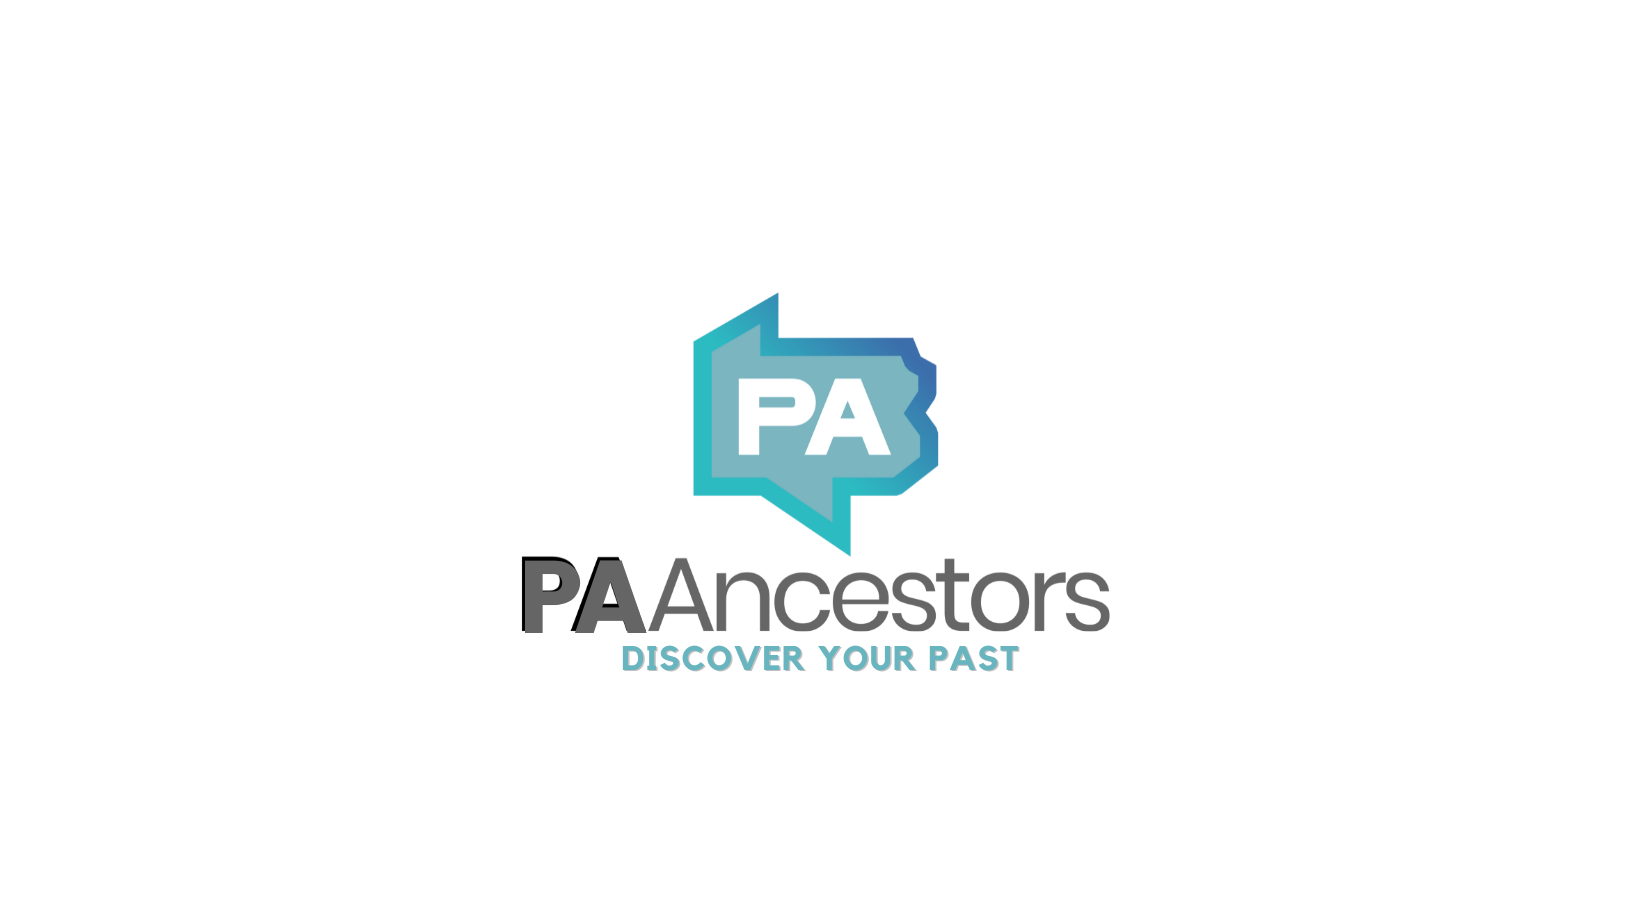 PA Ancestors